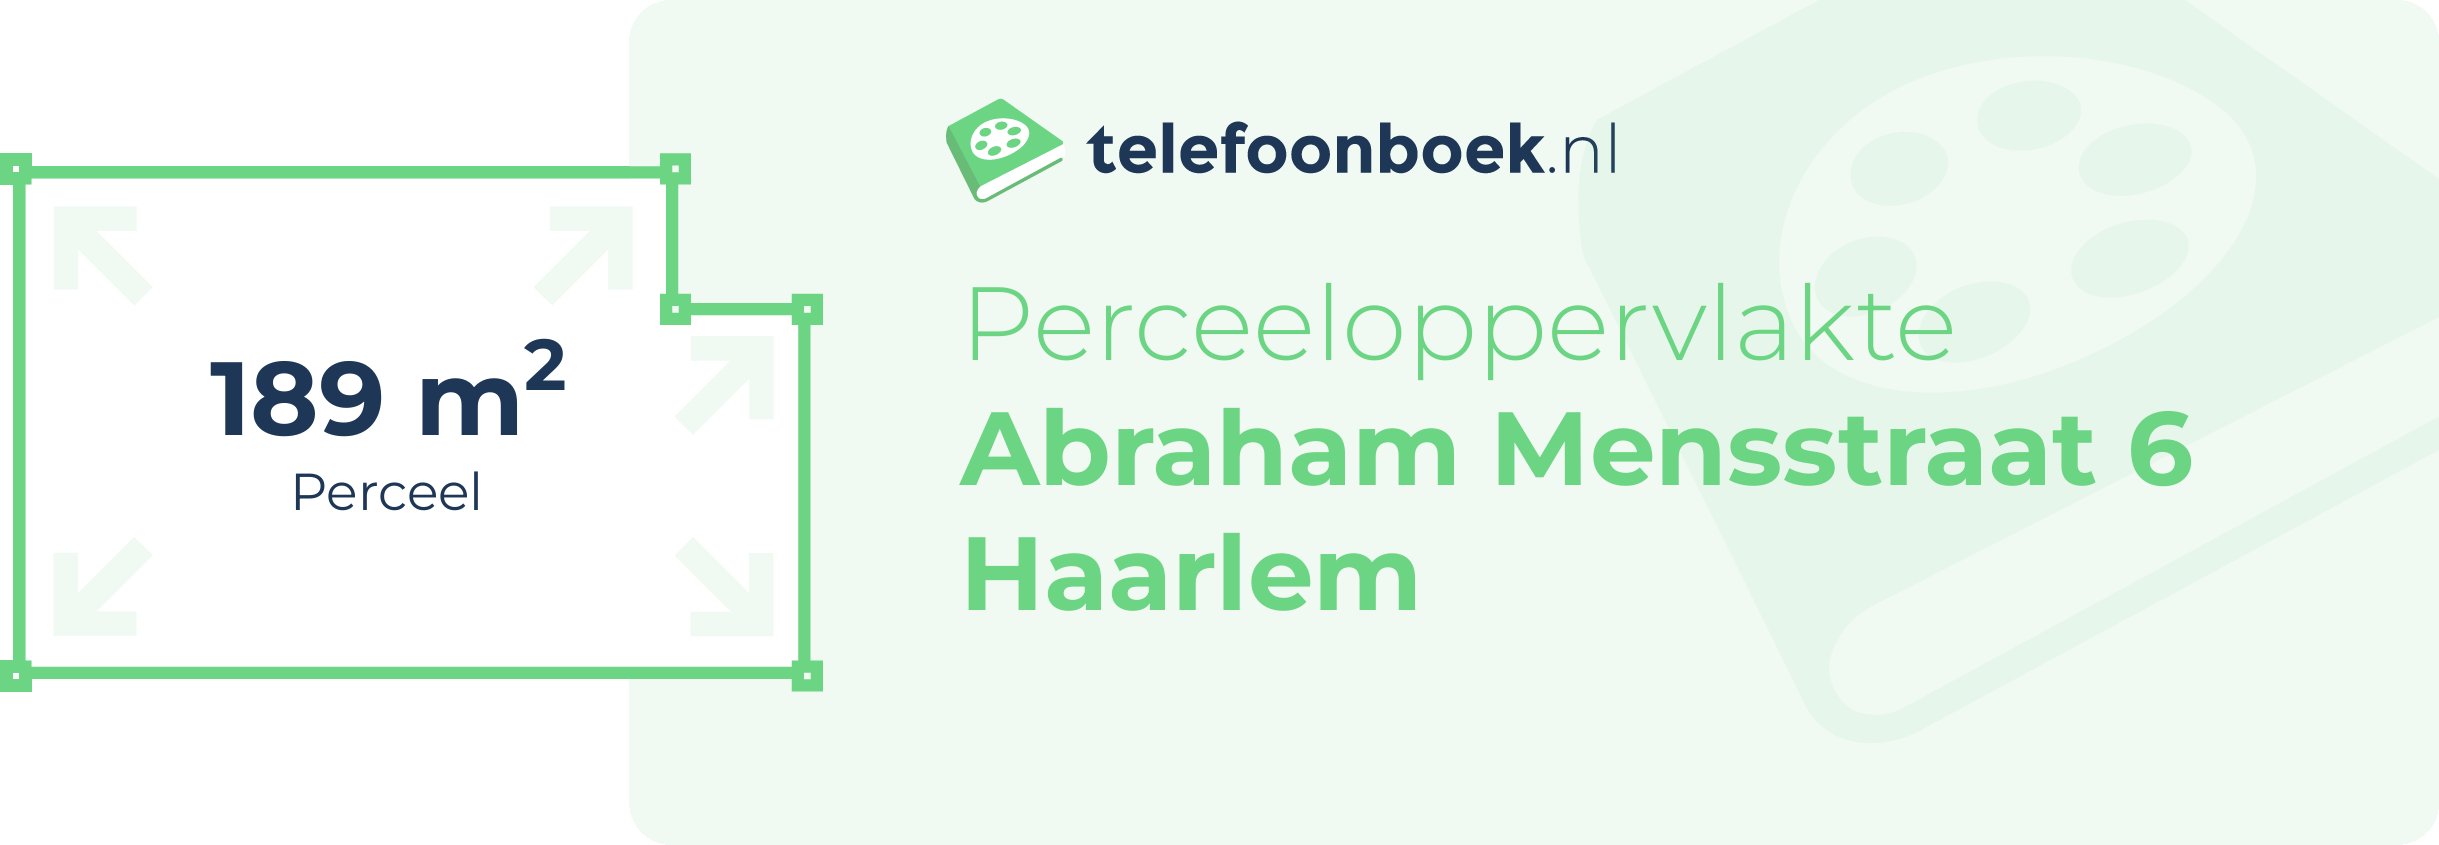 Perceeloppervlakte Abraham Mensstraat 6 Haarlem